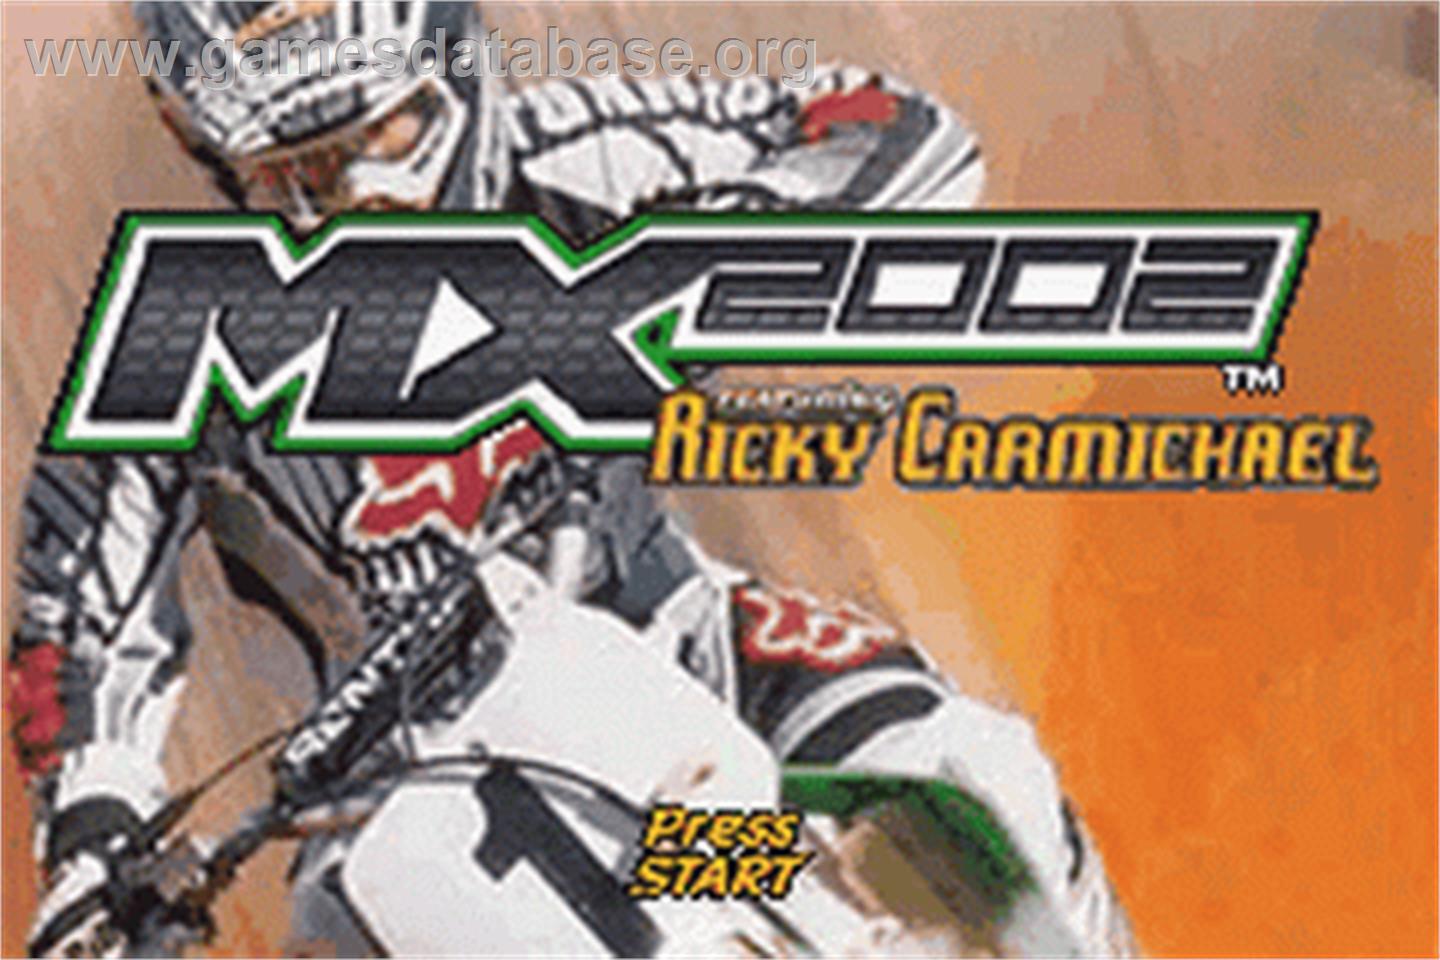 MX 2002 featuring Ricky Carmichael - Nintendo Game Boy Advance - Artwork - Title Screen